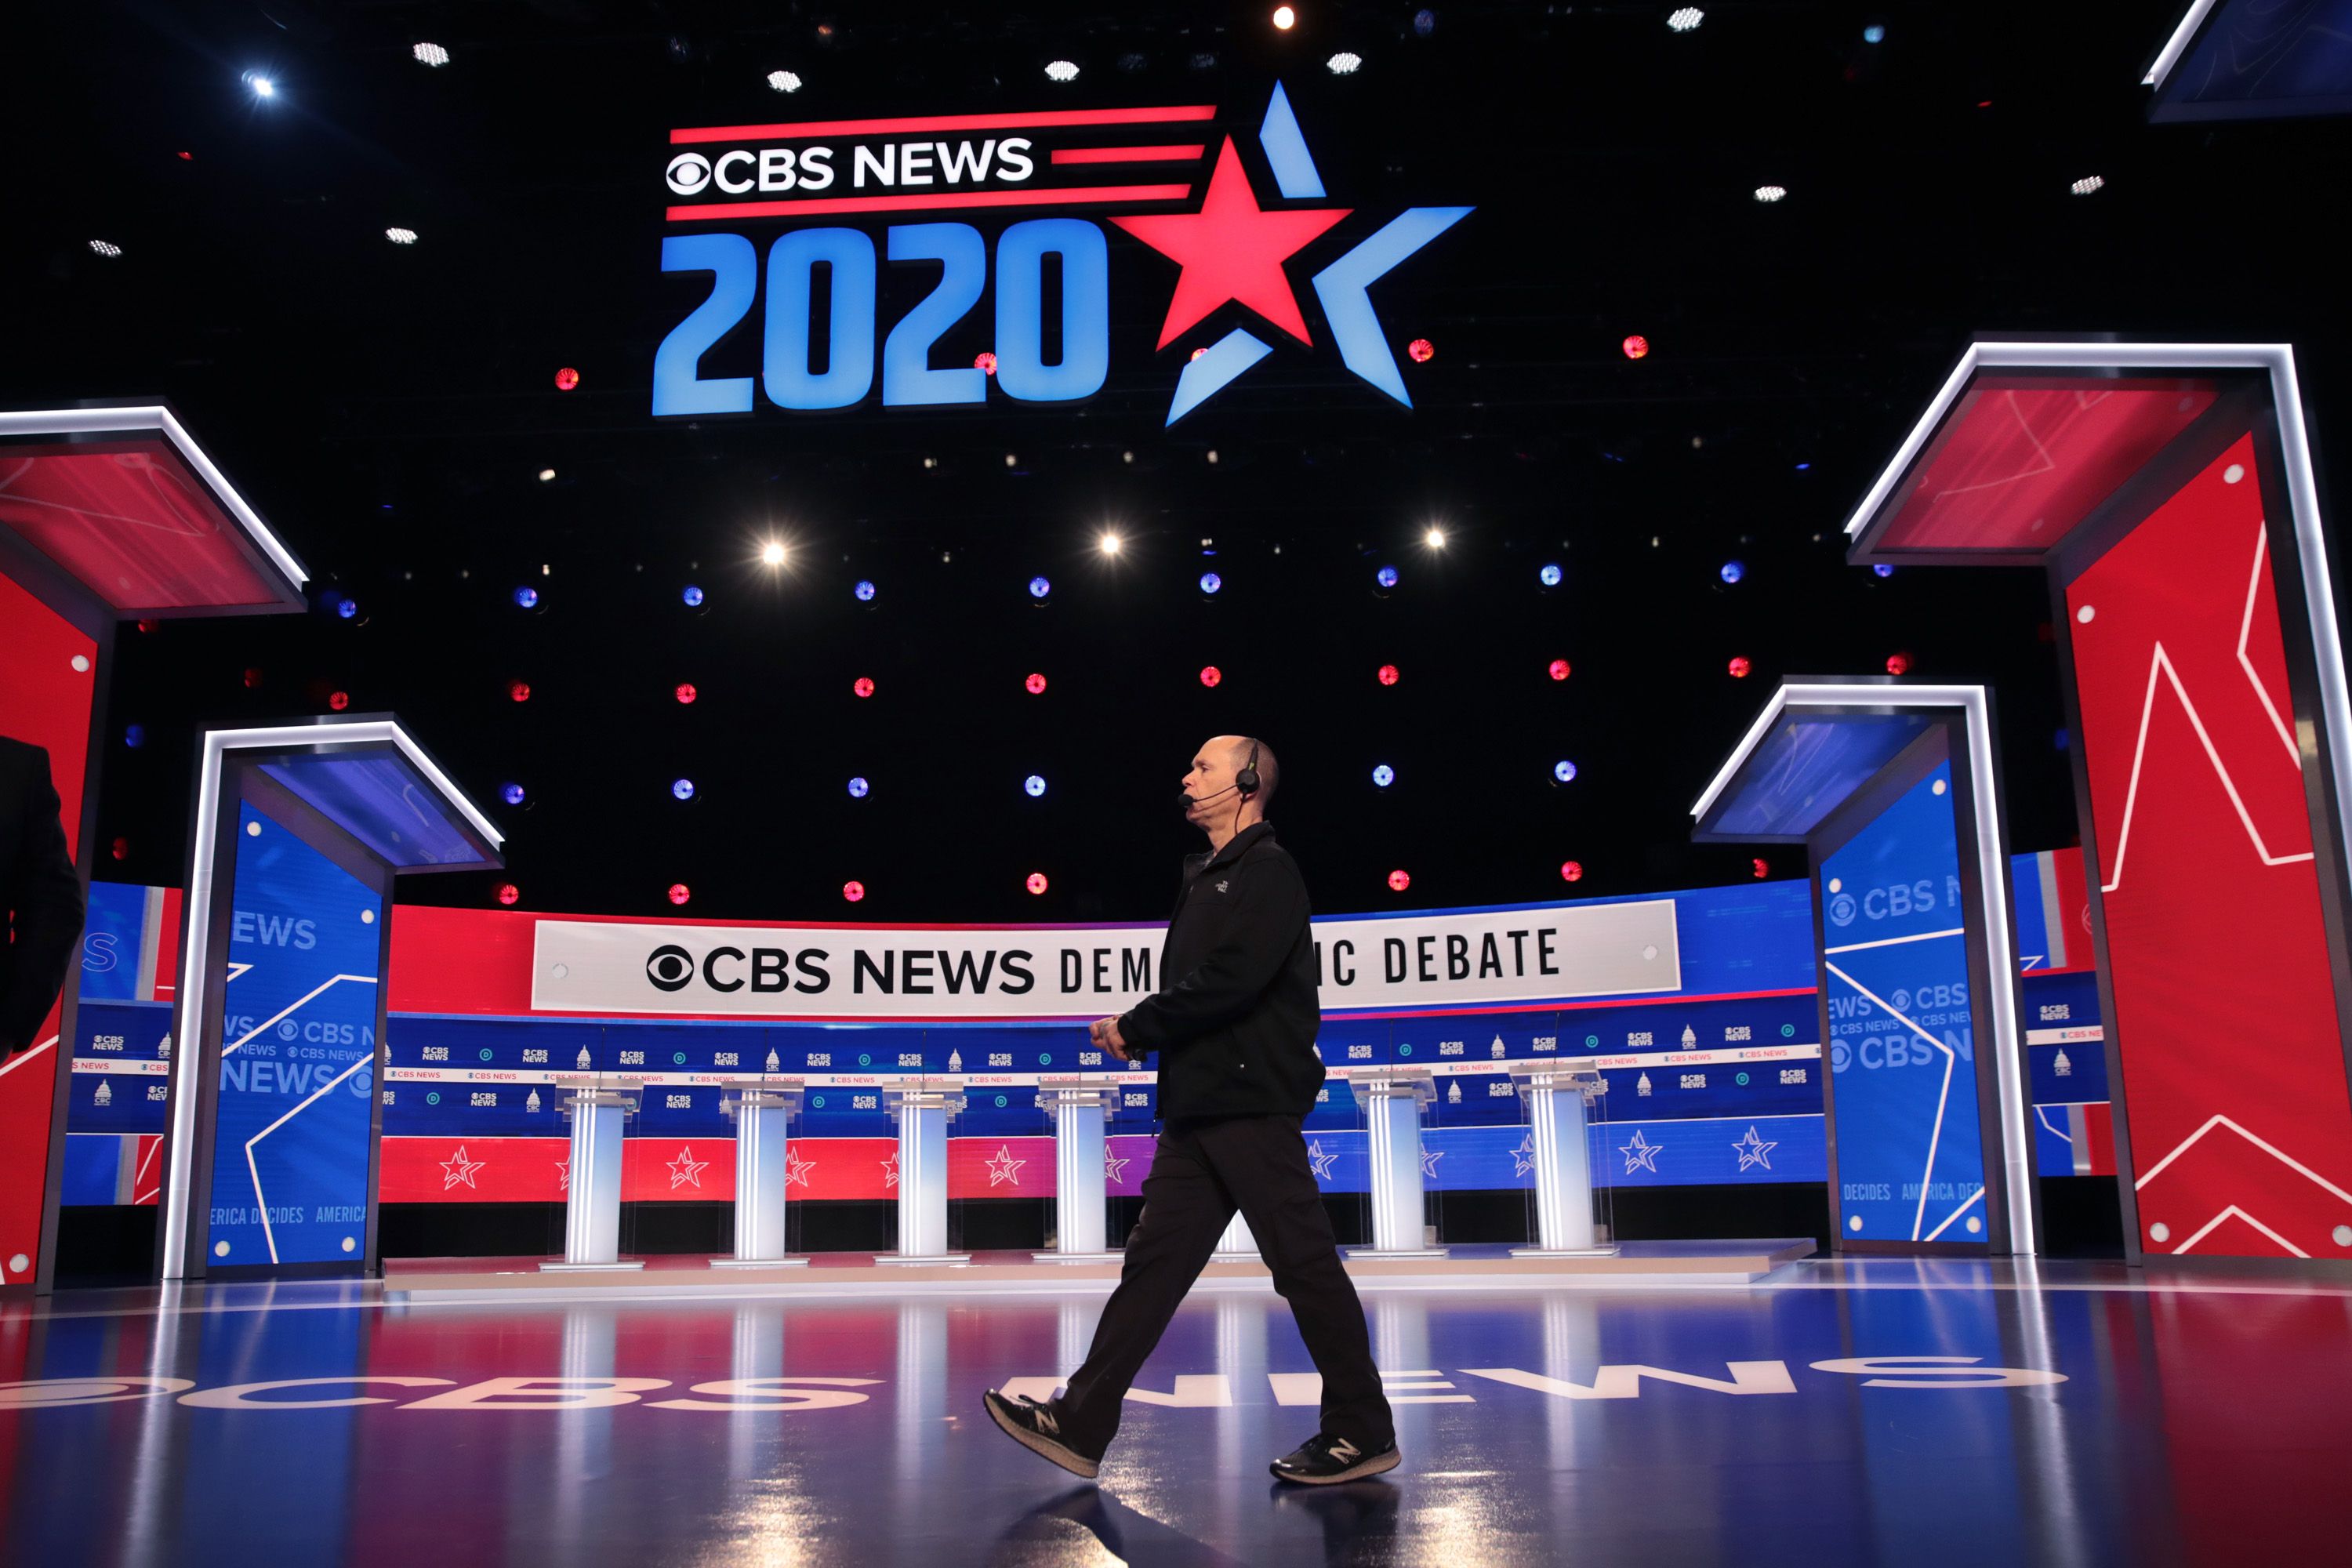 The debate stage